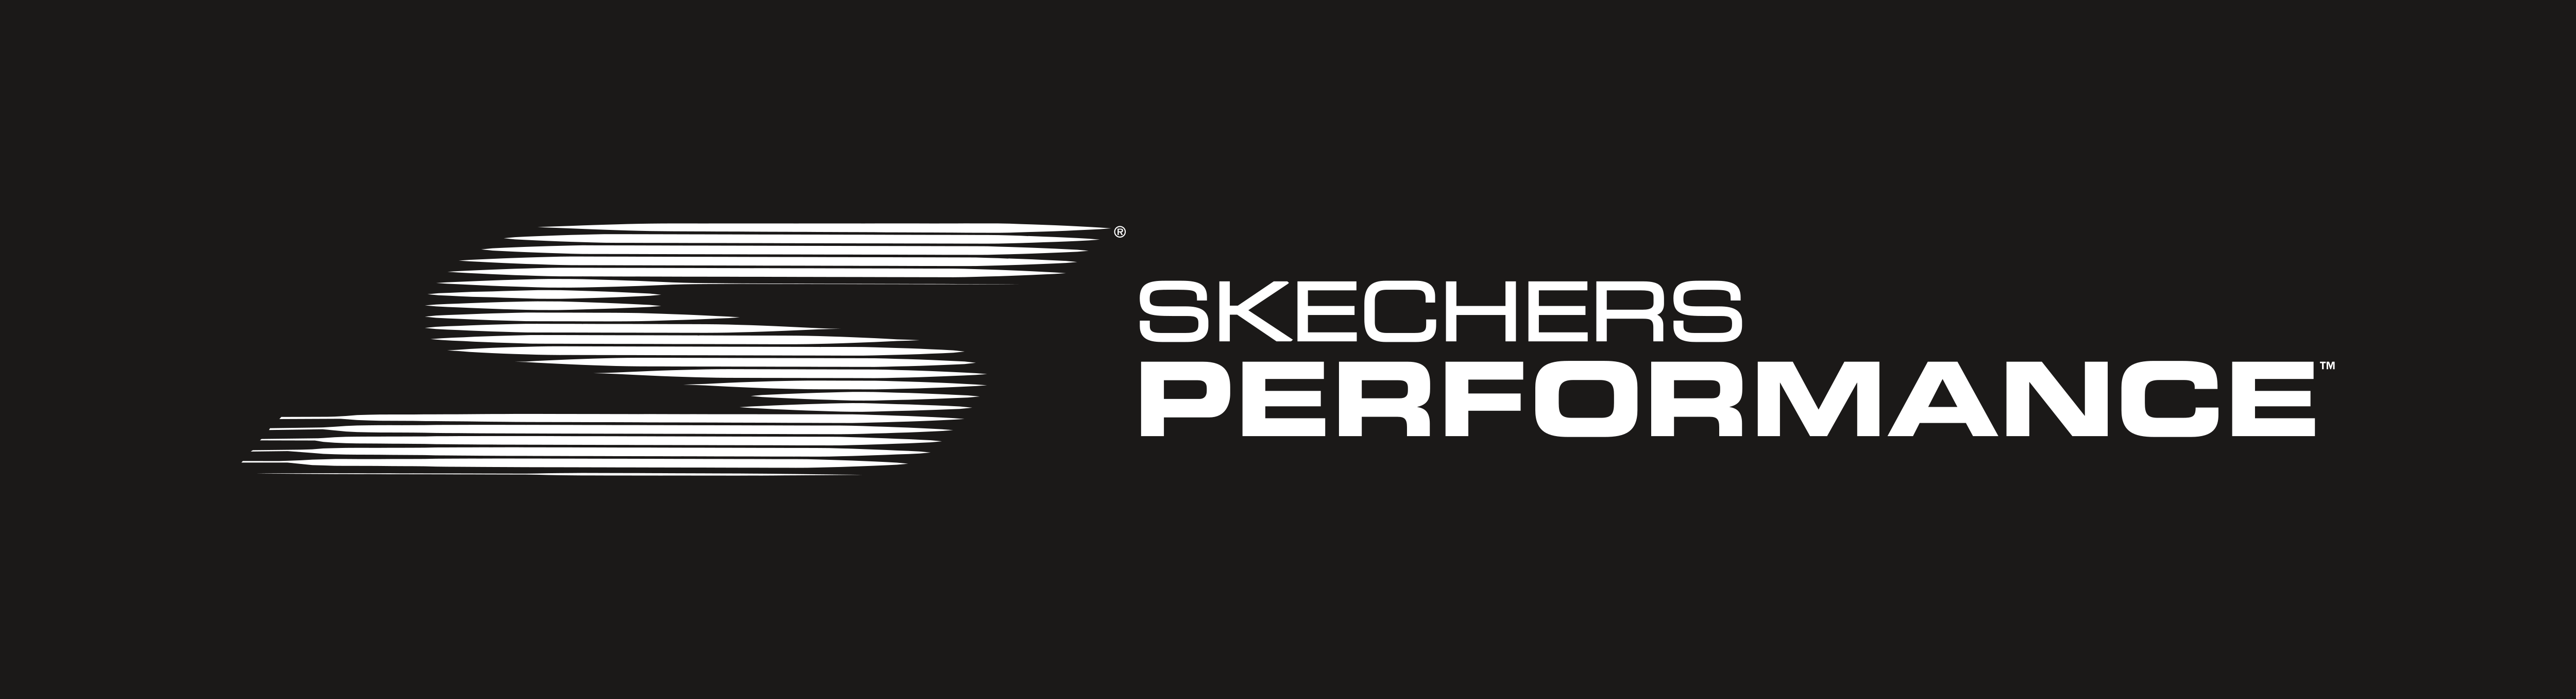 Skechers Performance Logo Vector, Buy Sale, 59% OFF, www.busformentera.com